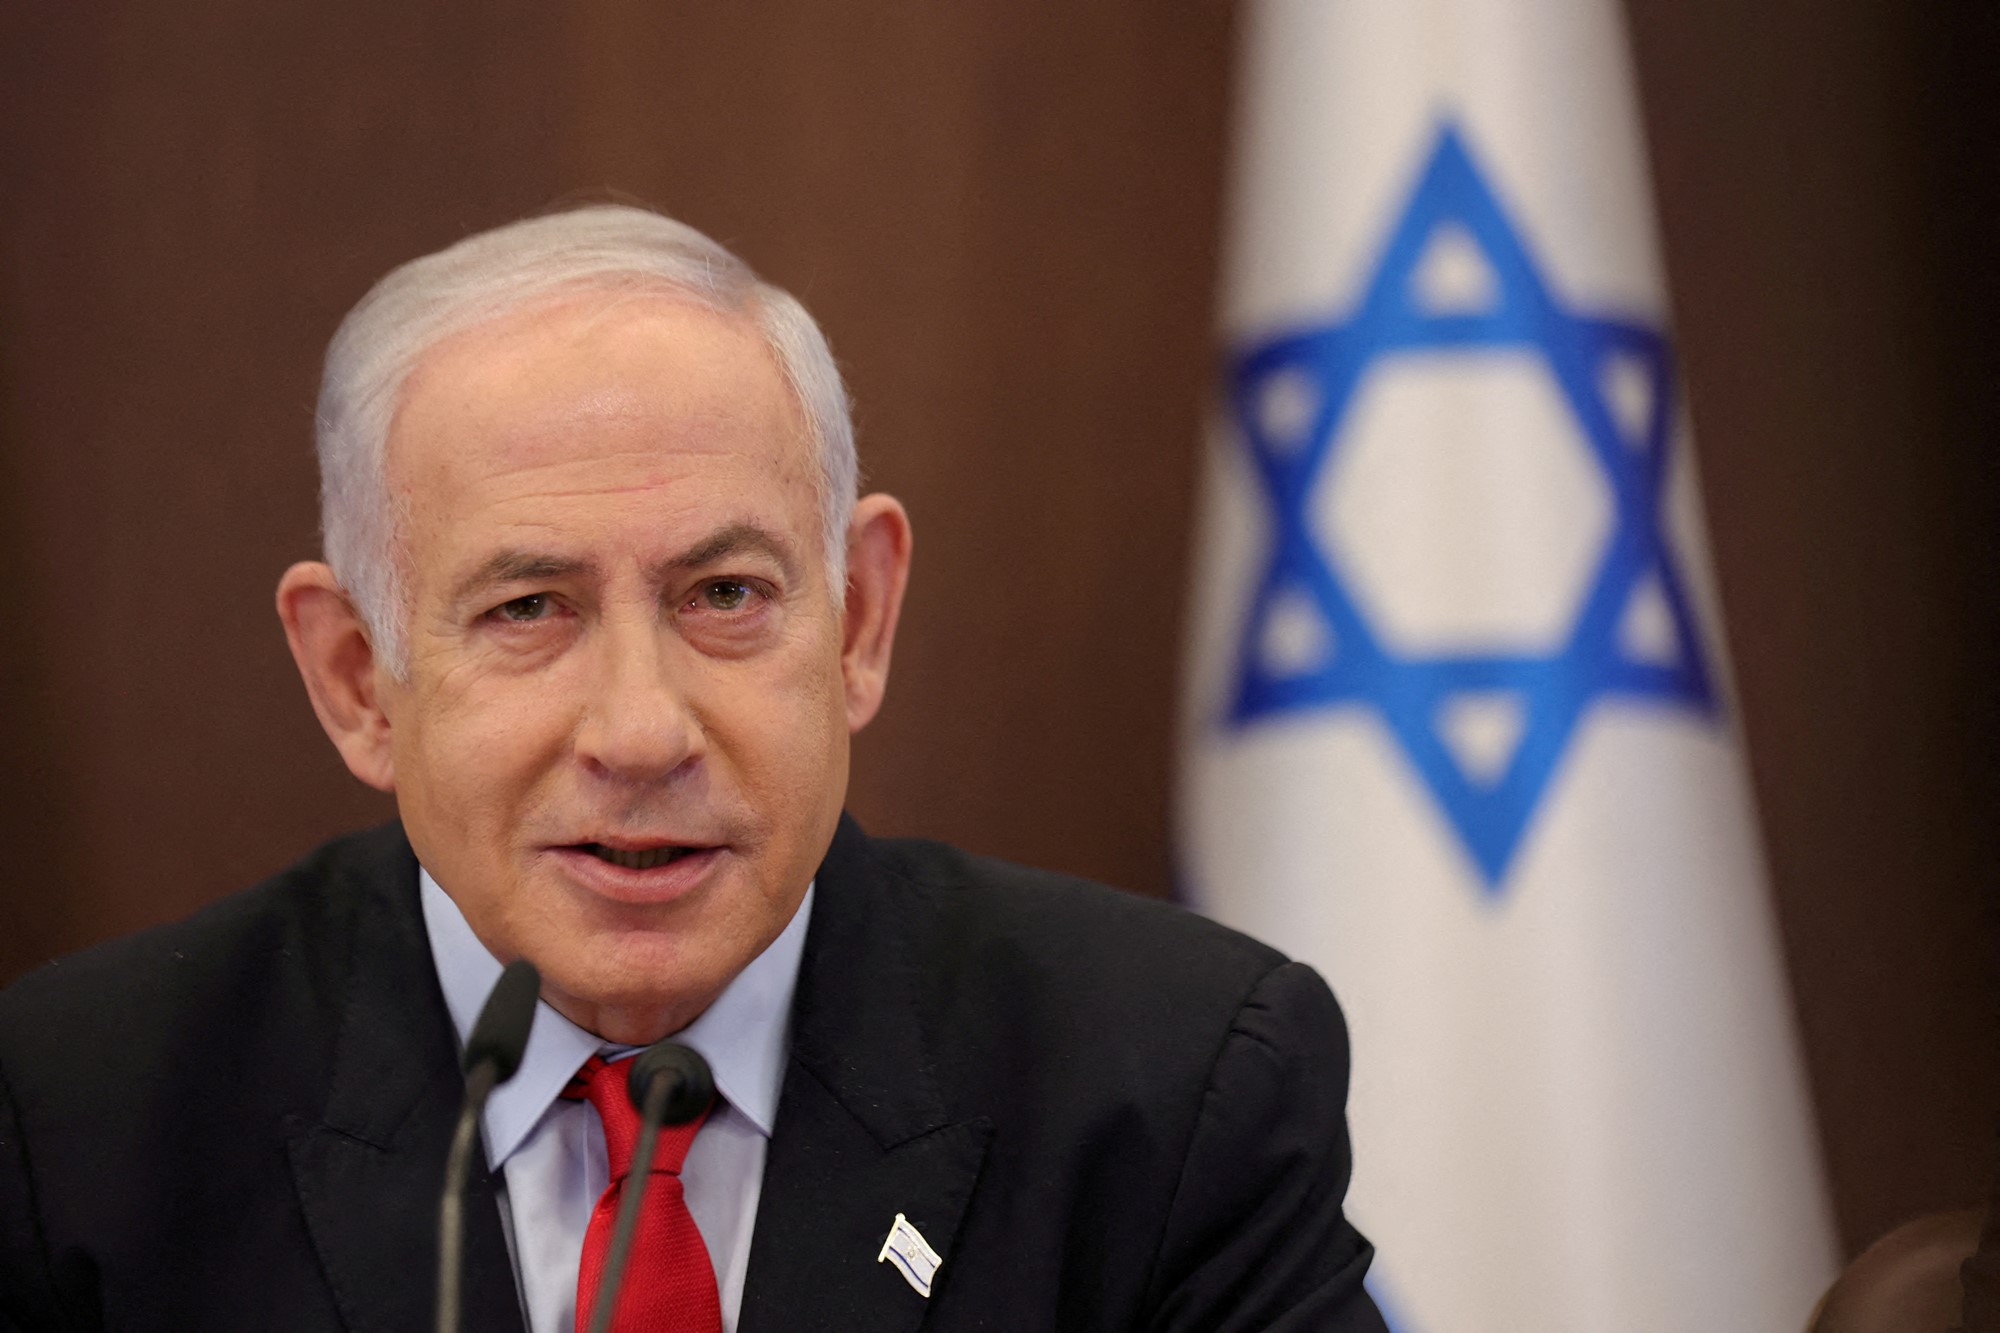 Benjamin Netanyahu in front of the Israeli flag